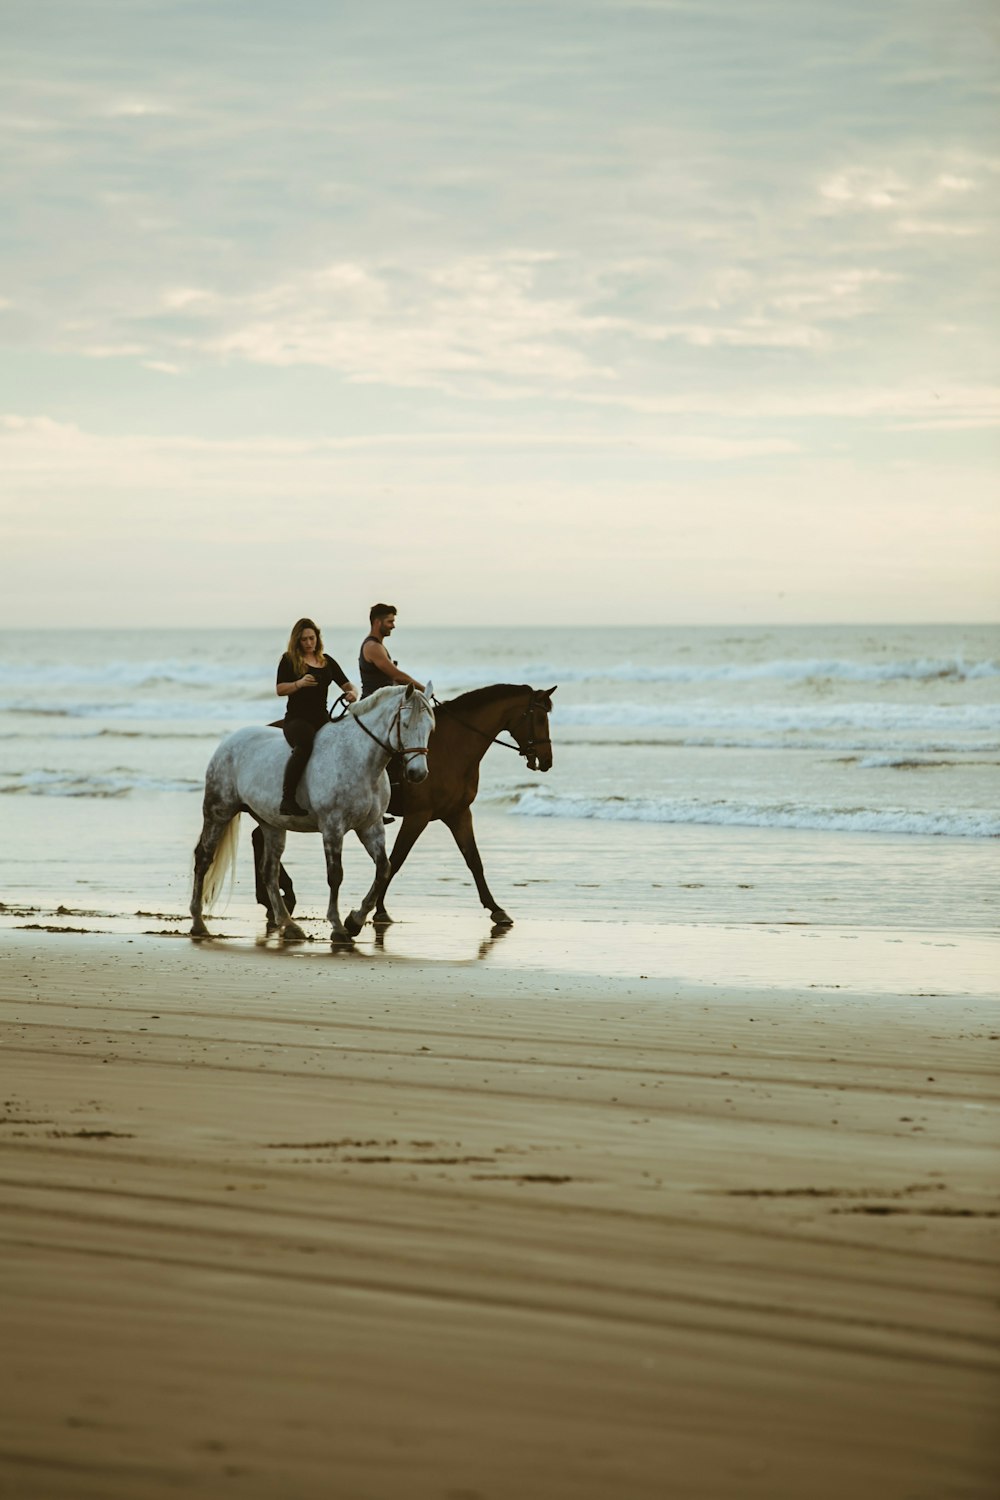 man and woman riding on horse near seashore